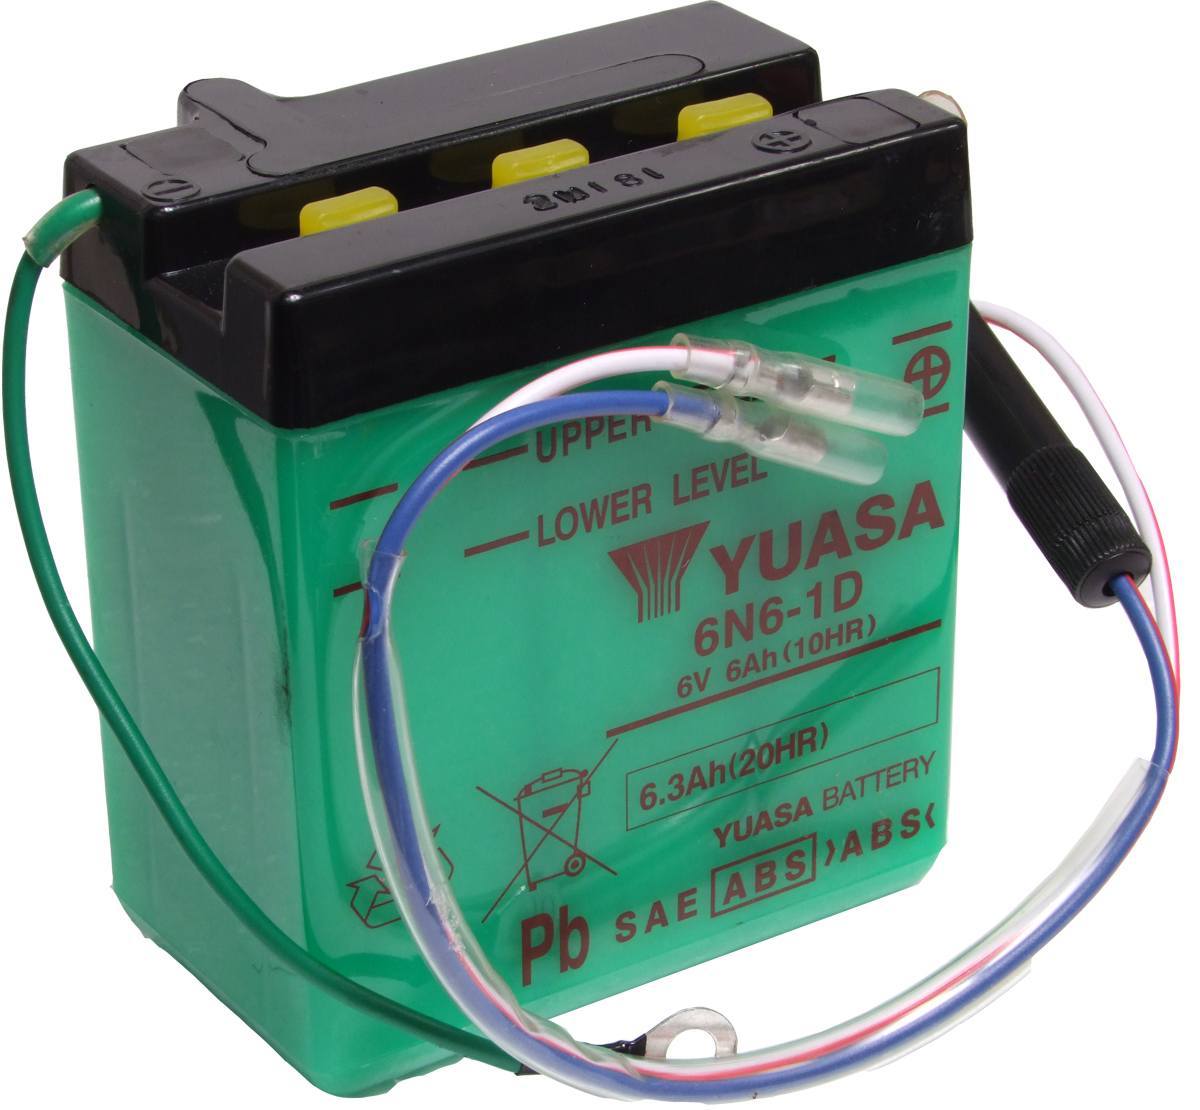 6N6-1D Yuasa Motorcycle Battery